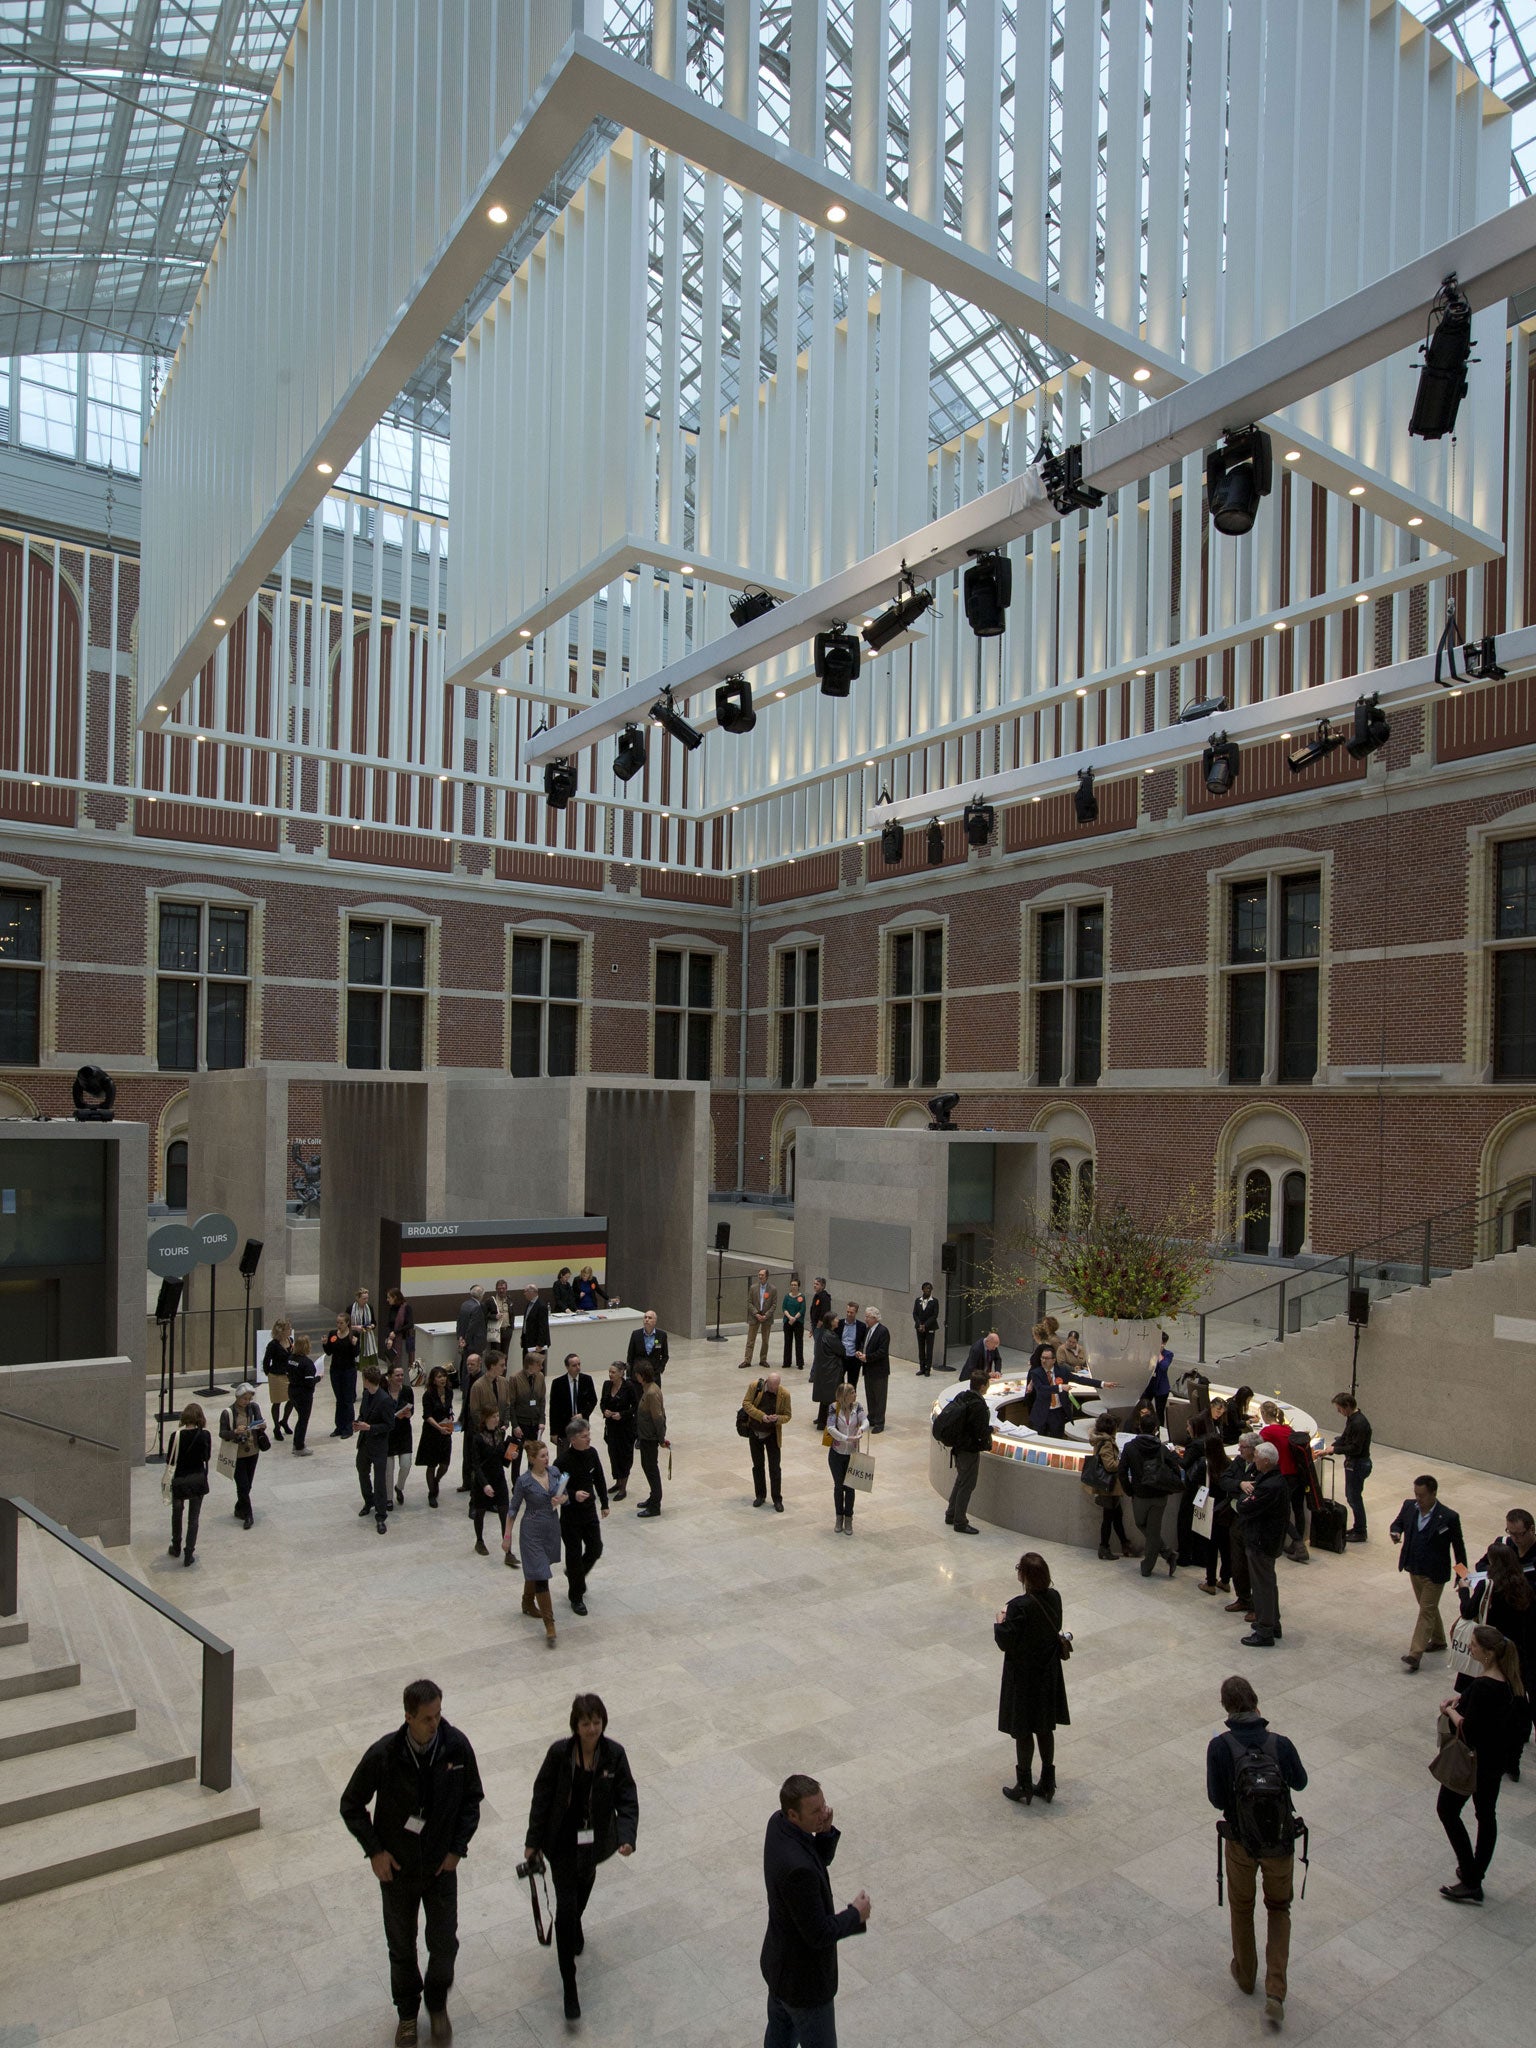 Light box: The new atrium opens up and illuminates the Rijksmuseum